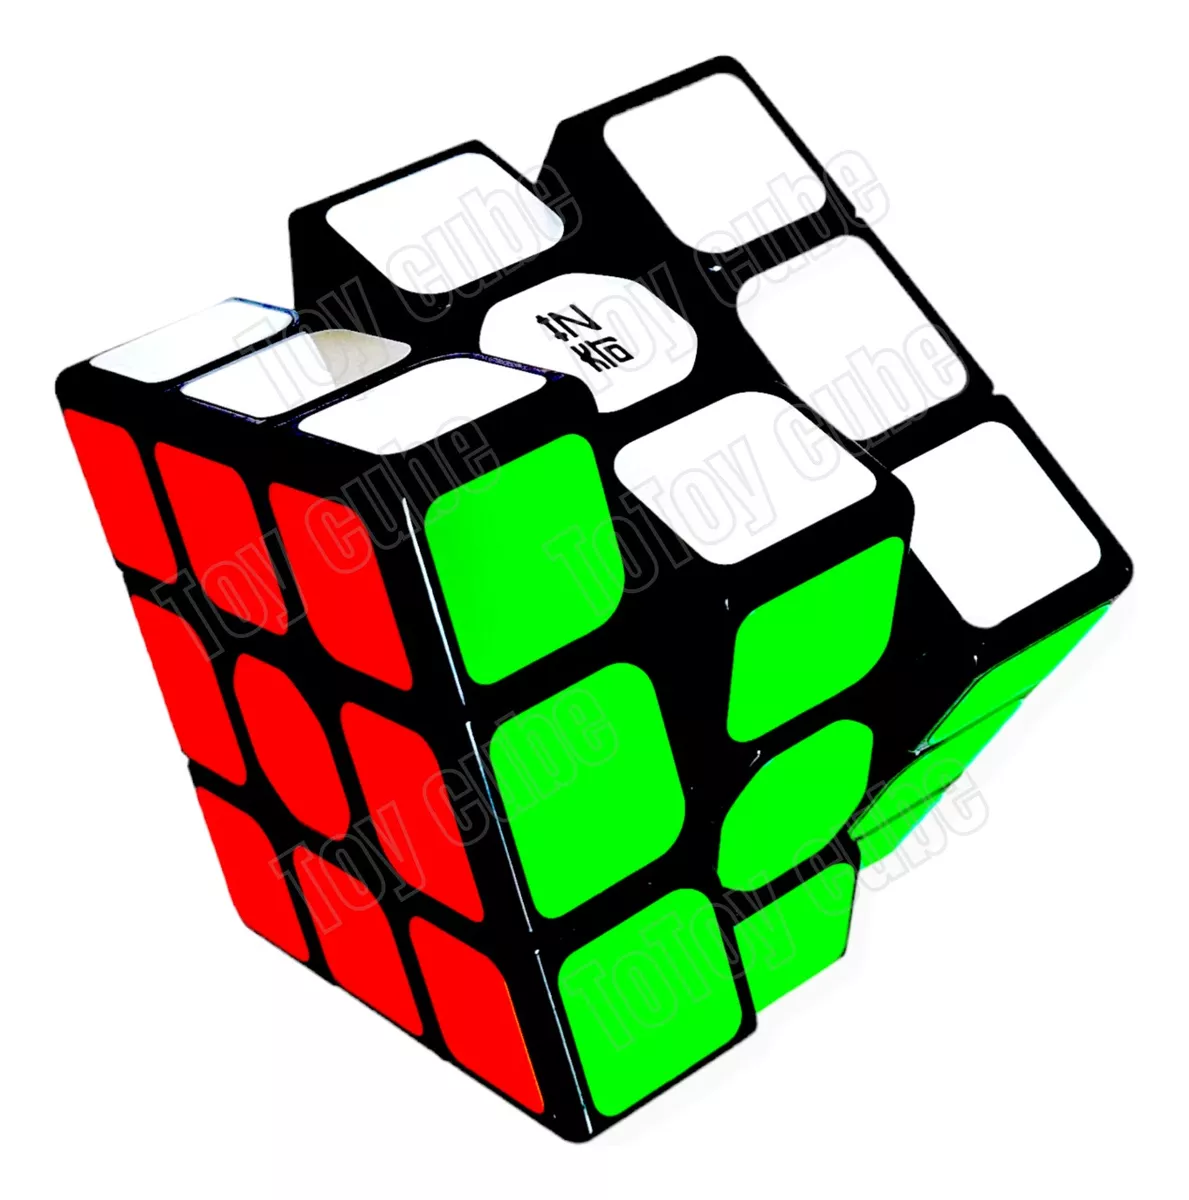 Cubo Mágico Profissional 3x3x3 Qiyi - Preto - Original